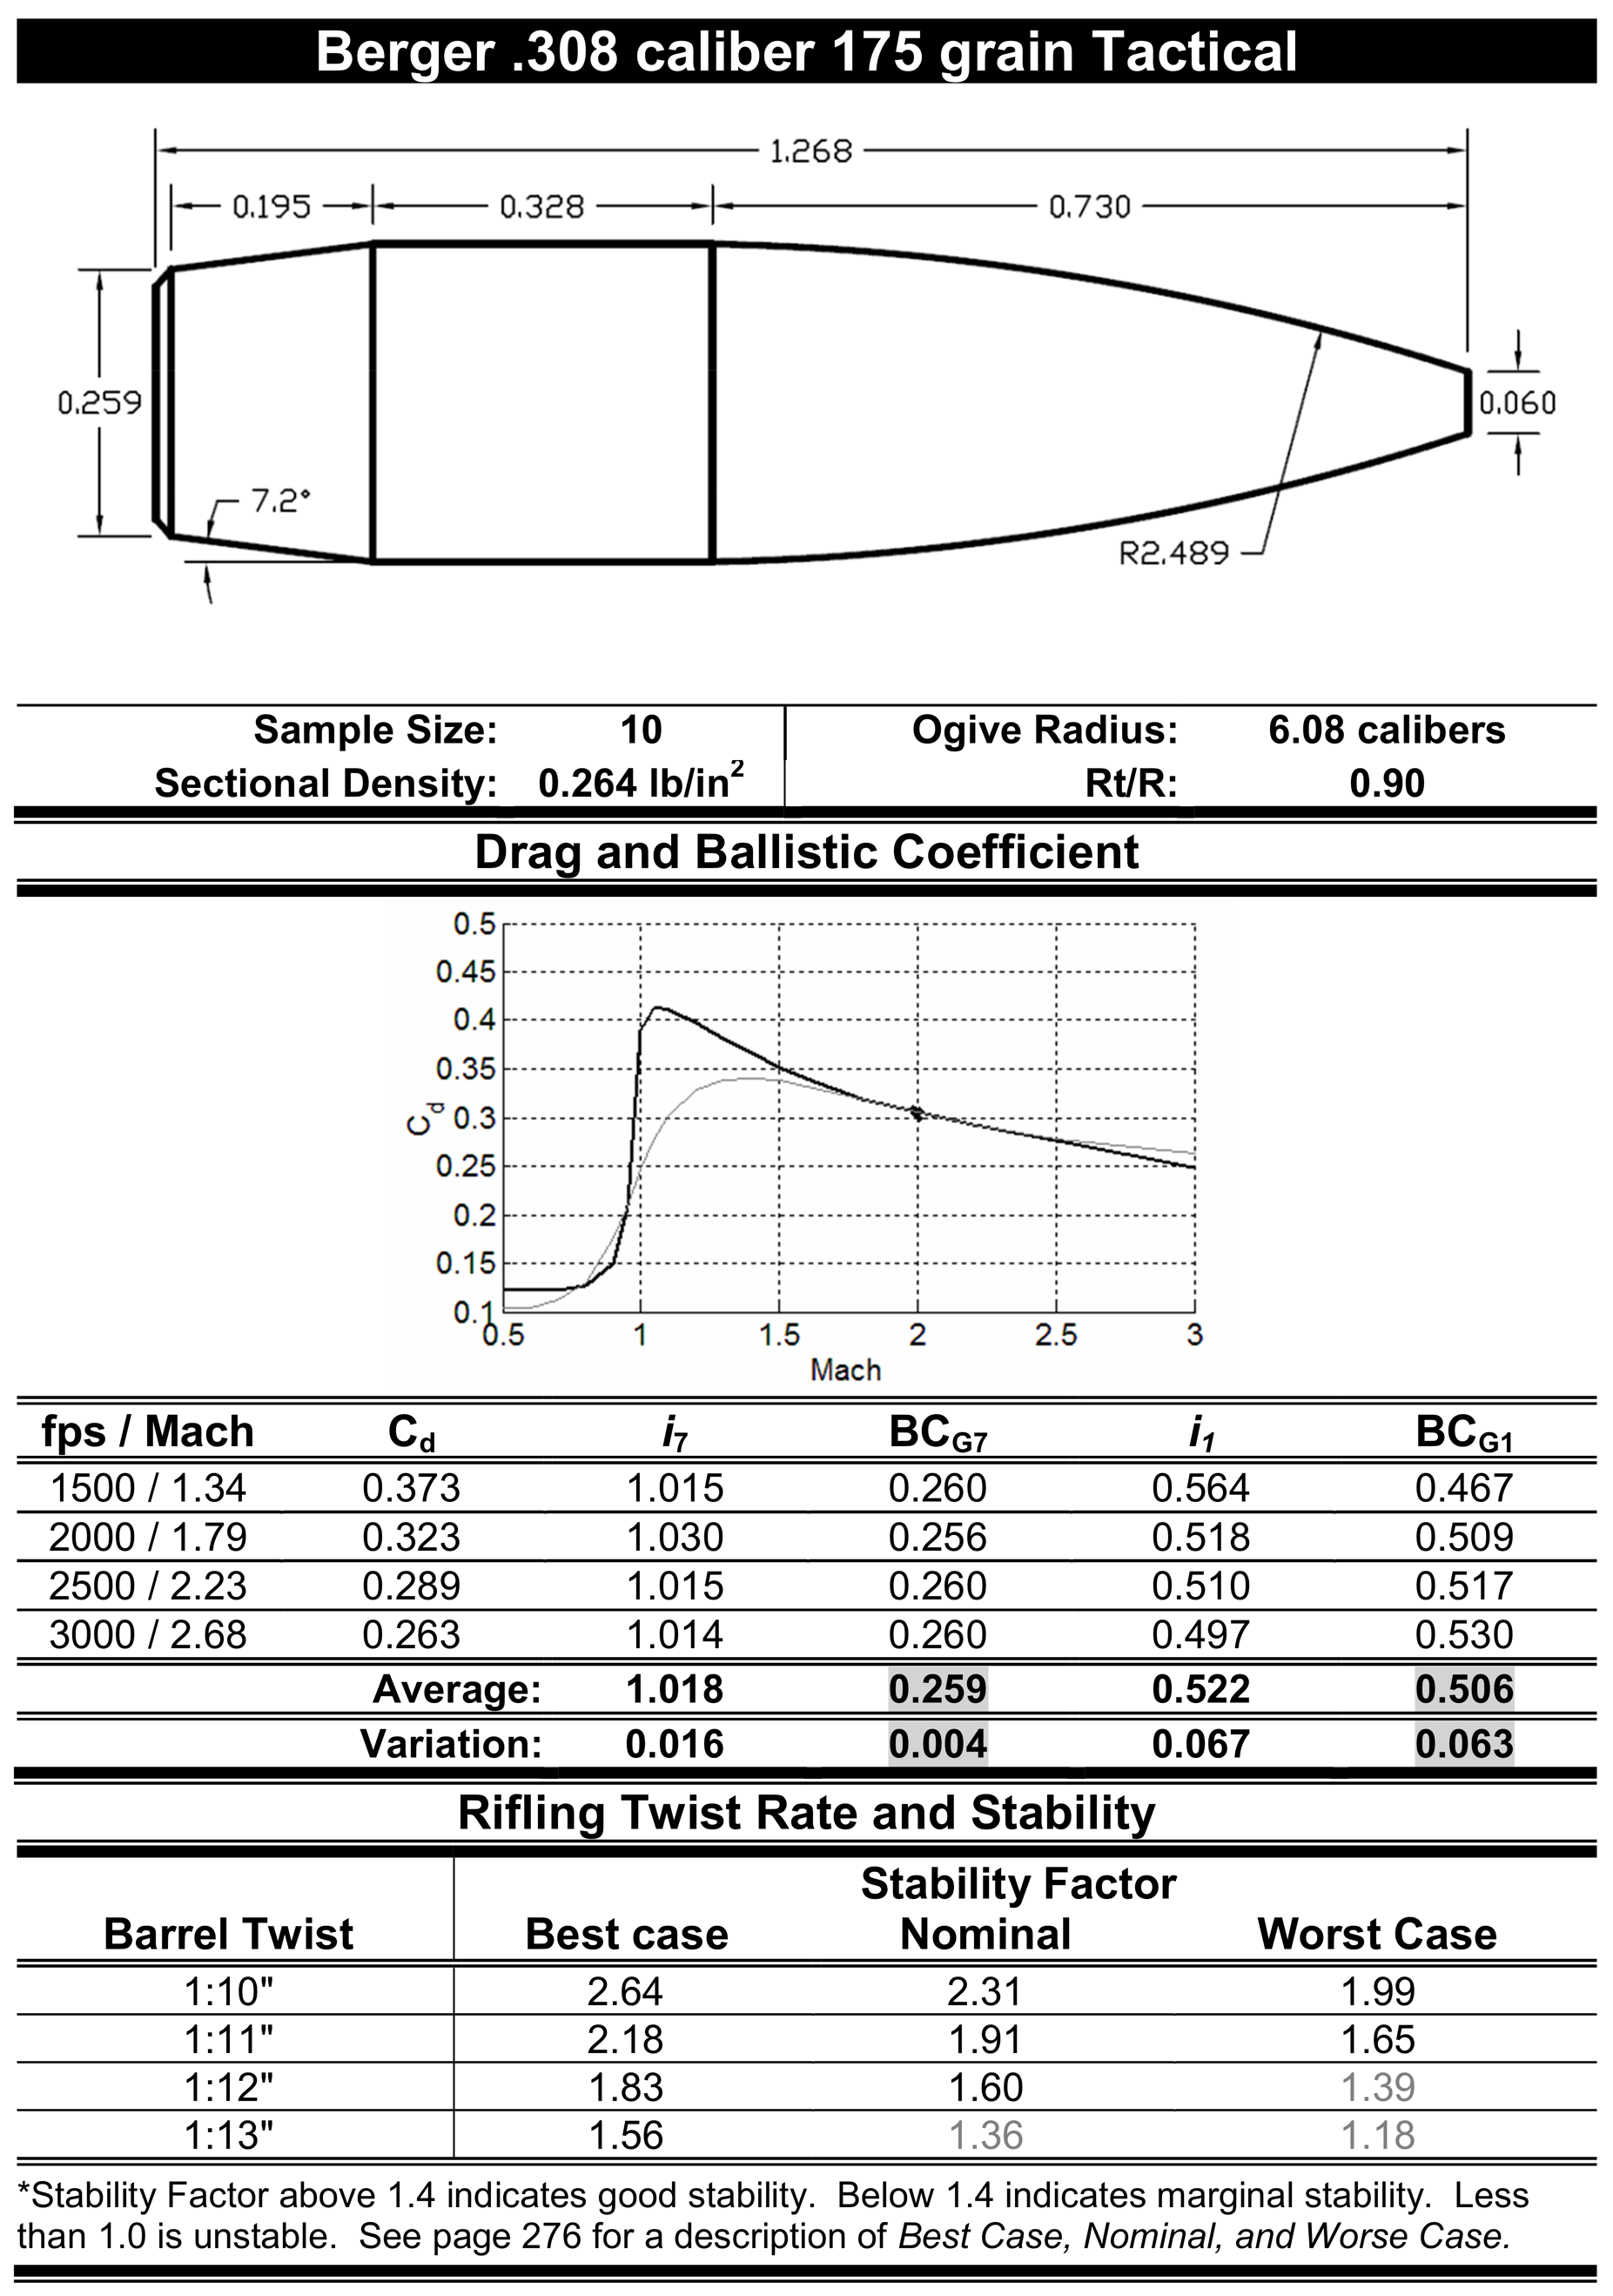 Bullet Data - Applied Ballistics LLC